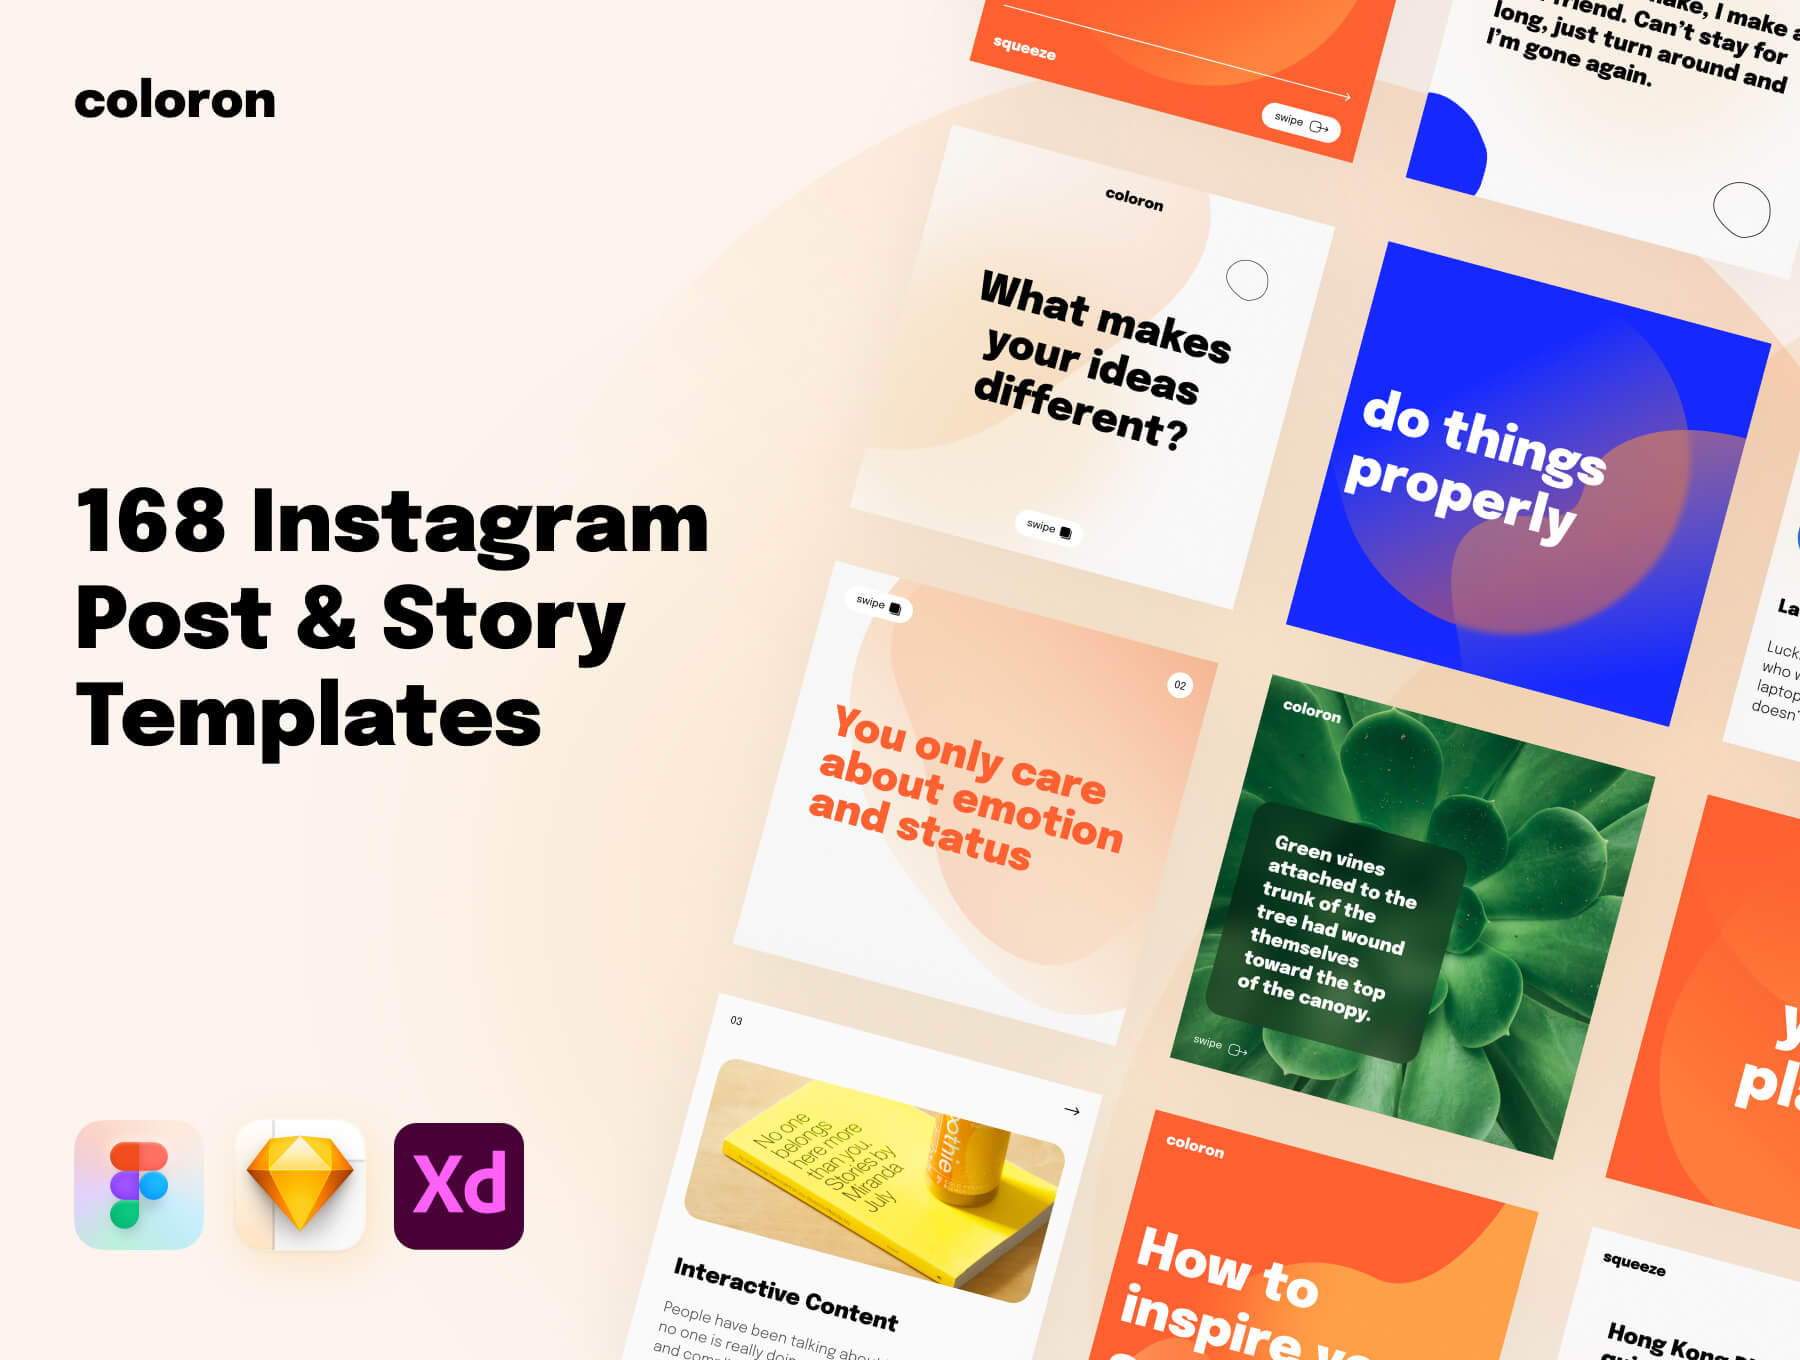 创意插图幻灯片摸吧素材Coloron – Instagram Posts & Stories Templates插图1